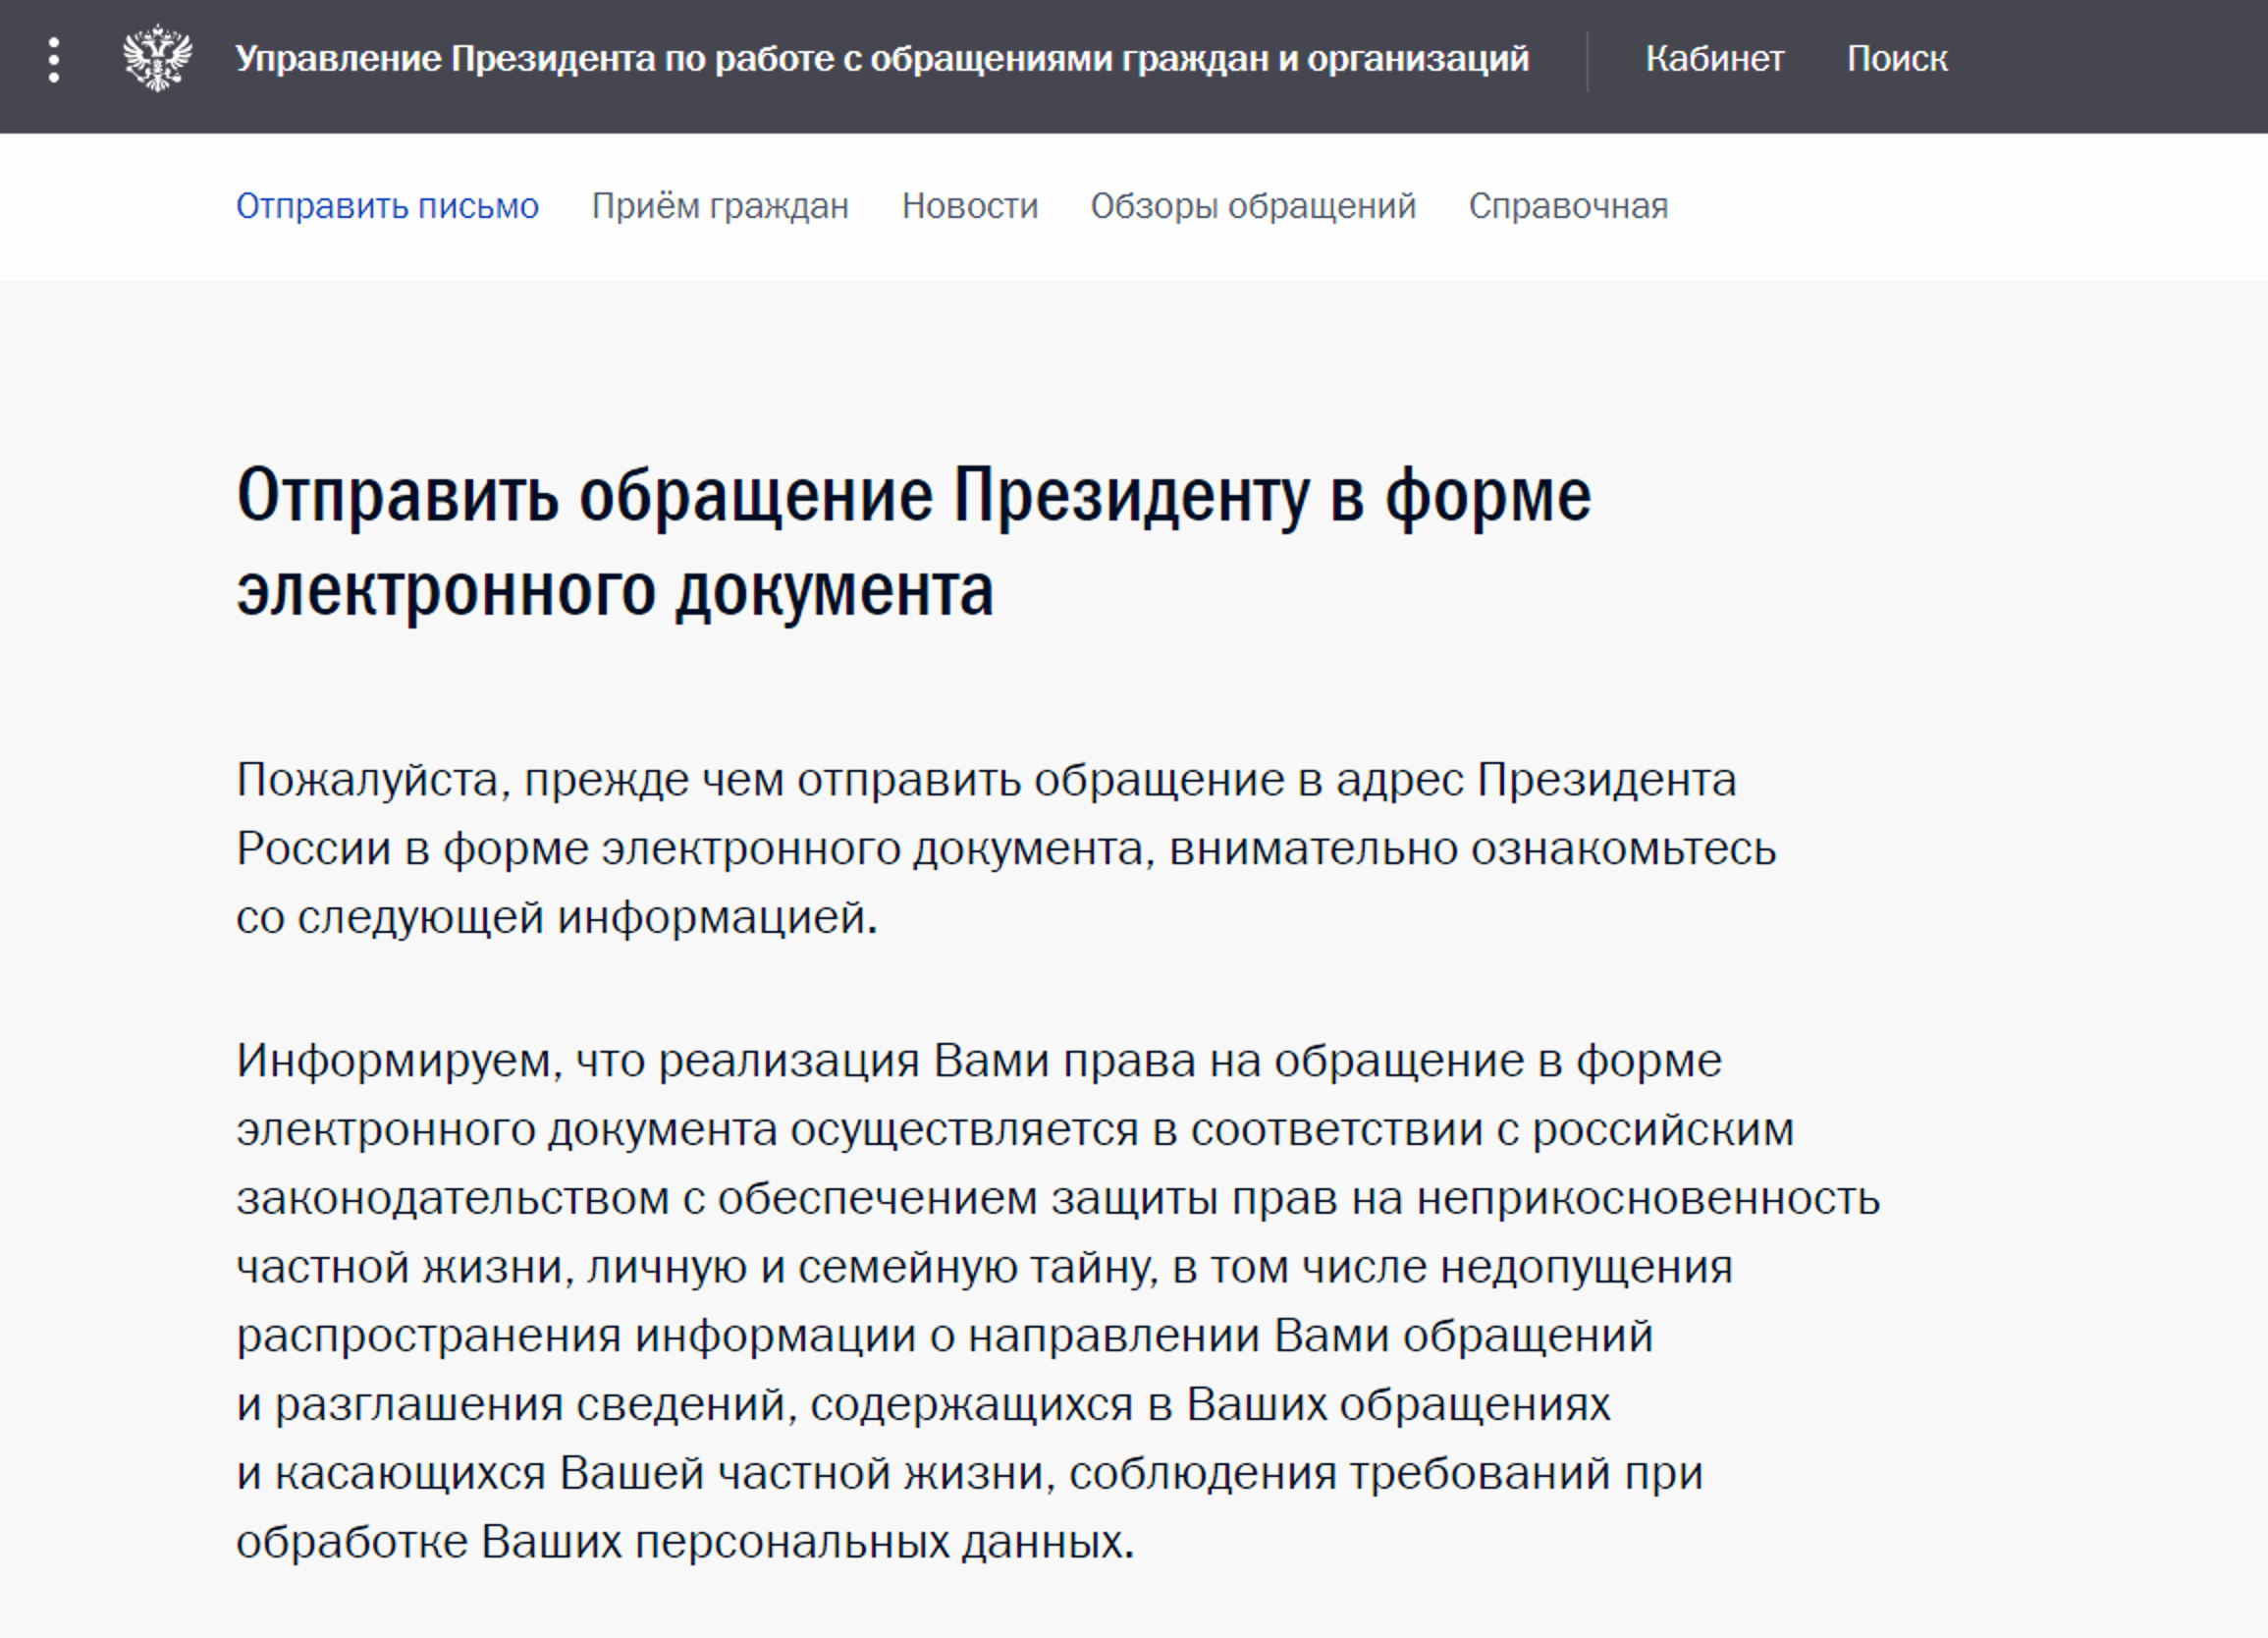 Сайт президента для граждан. Администрация президента РФ обращение граждан.